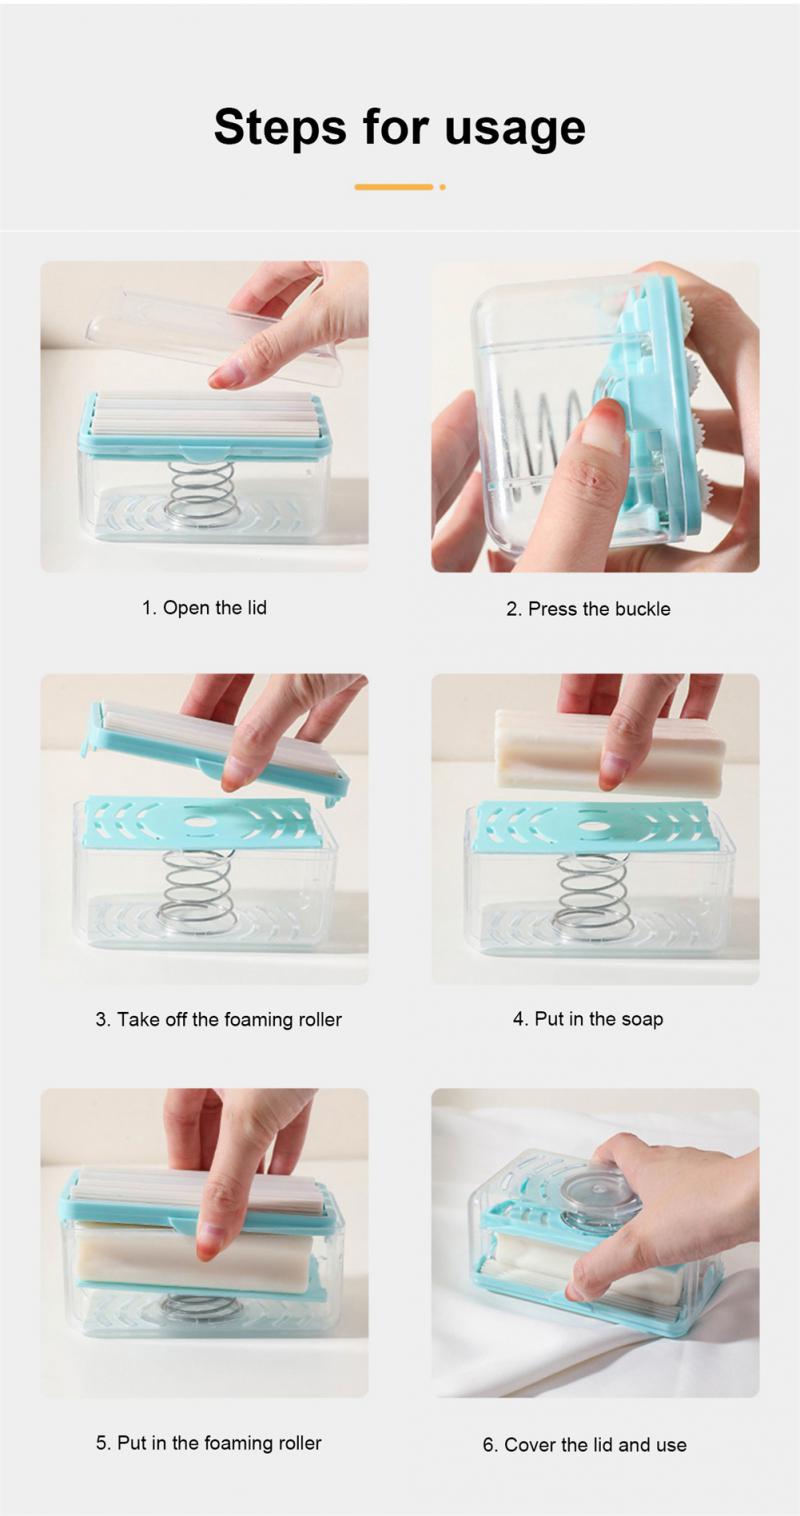 Multifunctional Laundry Soap Dish Rub-free Soap Box